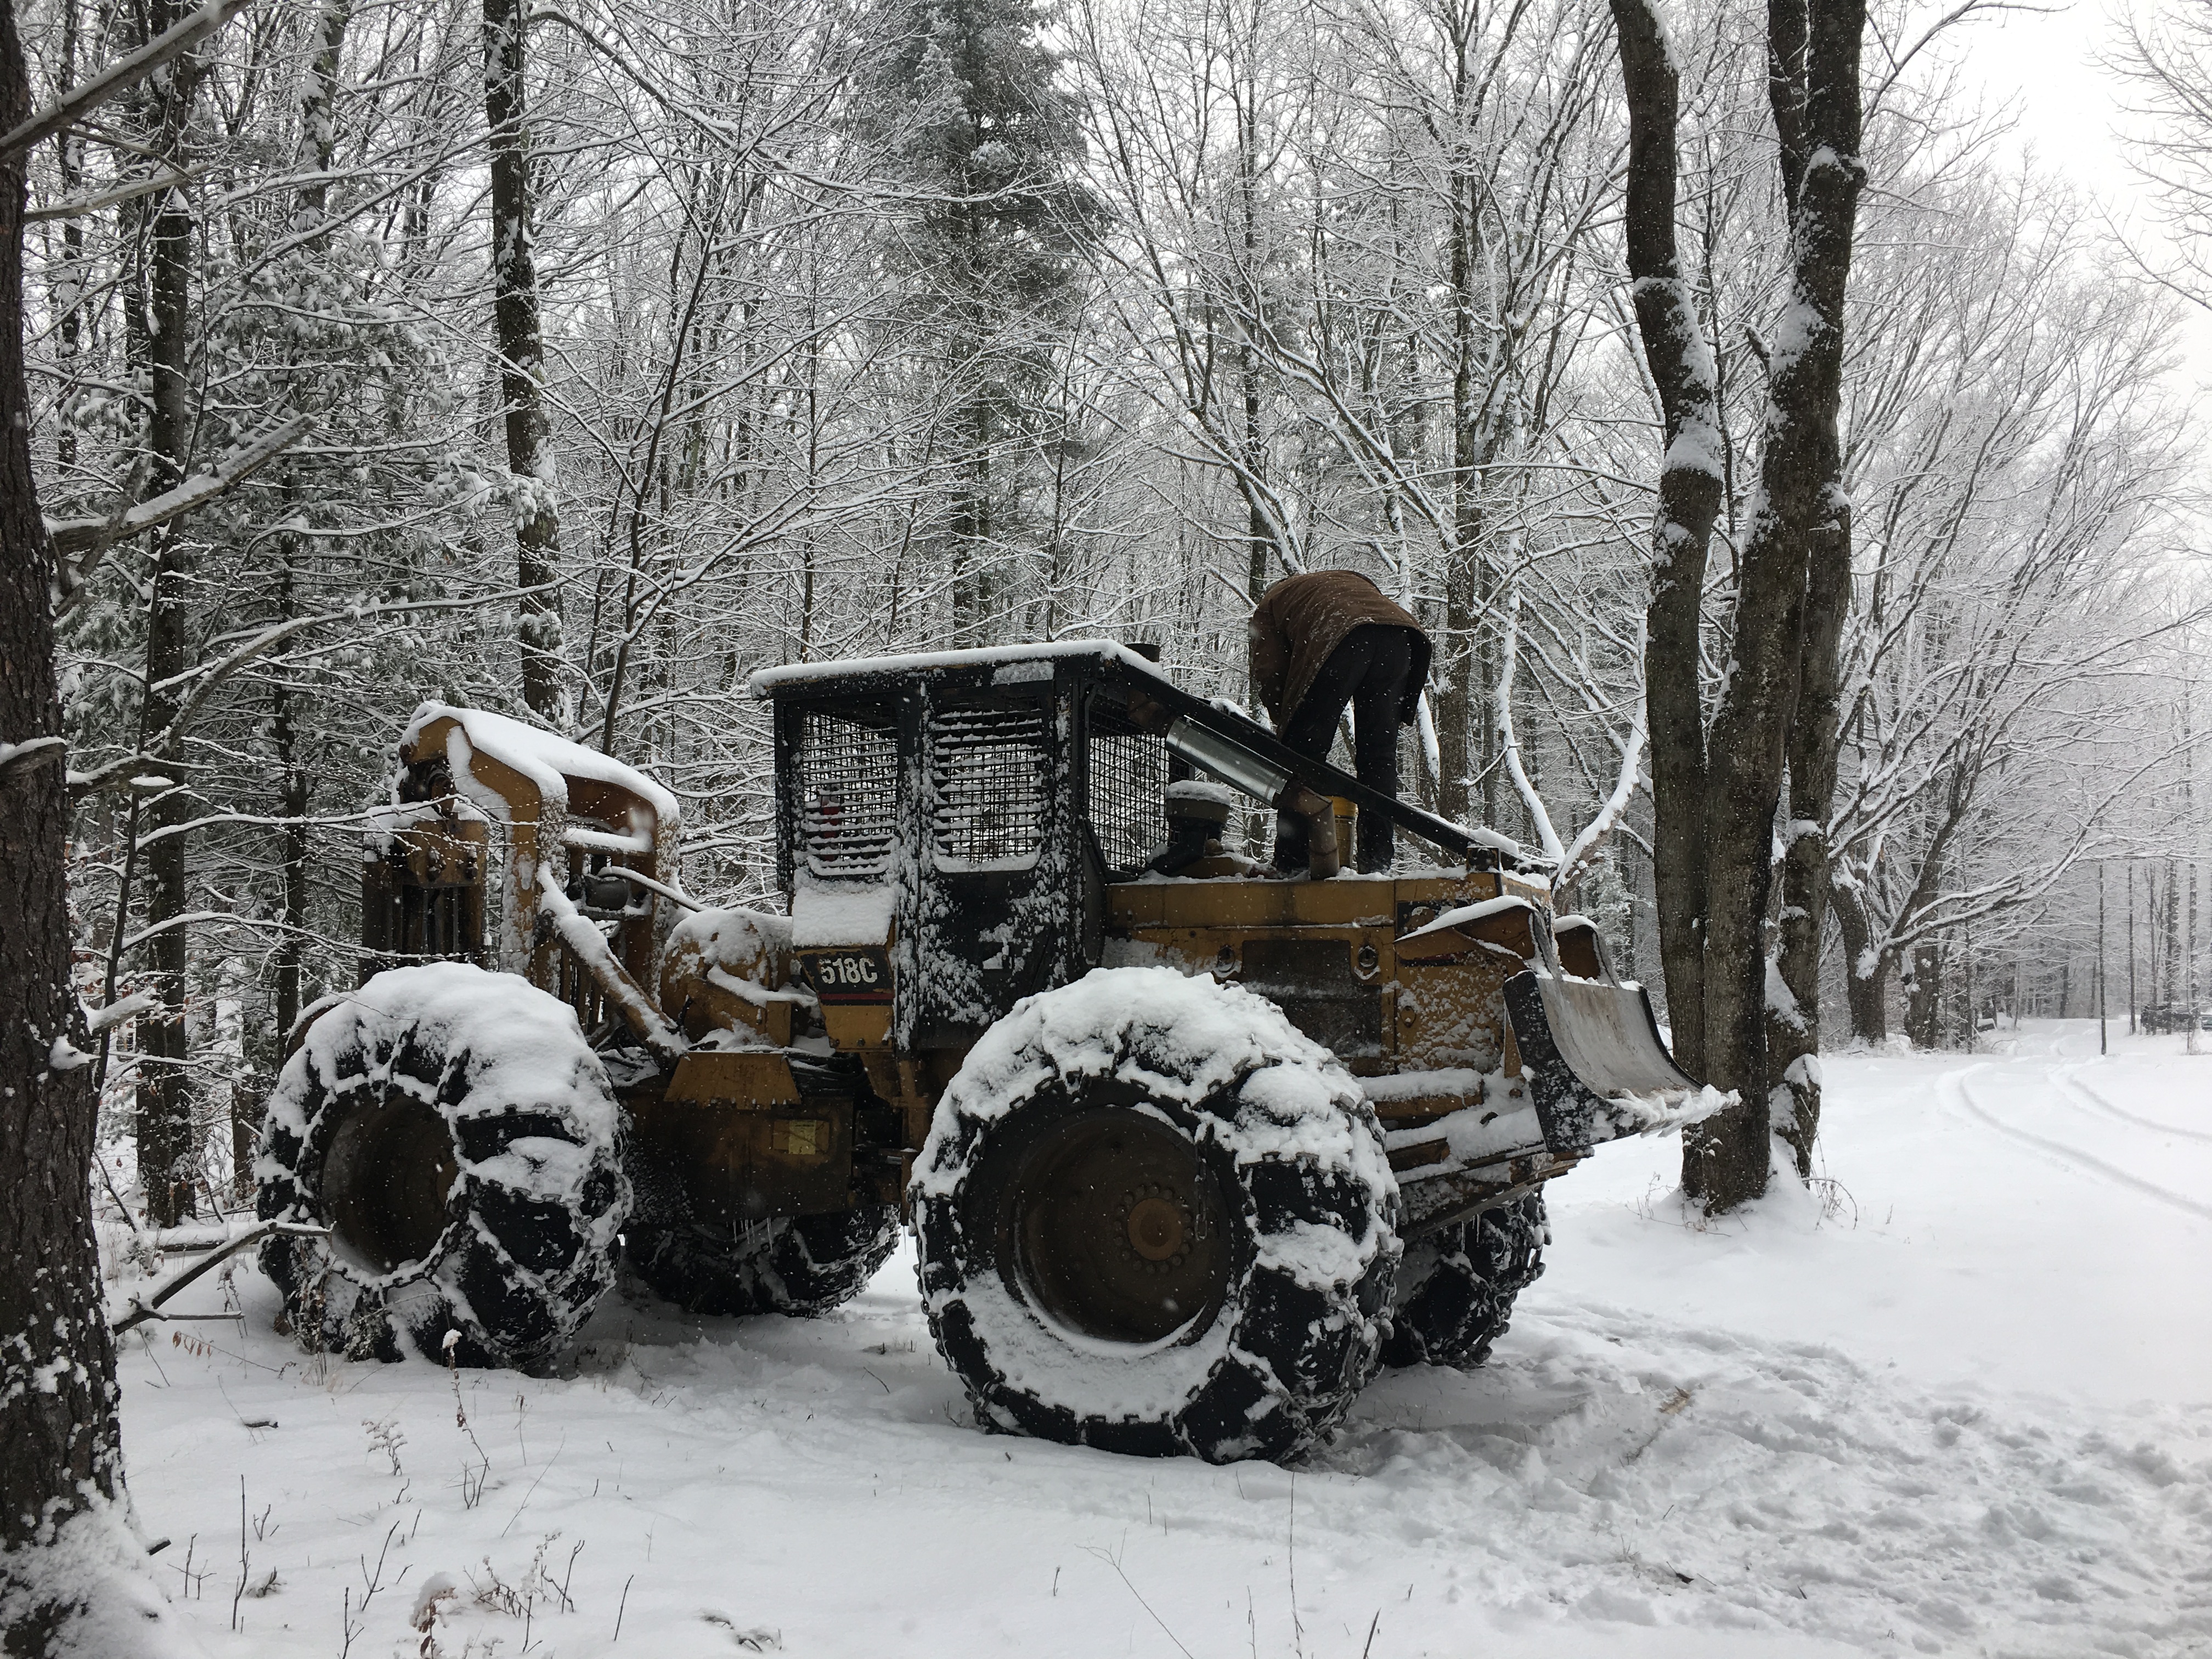 Man on bulldozer in winter